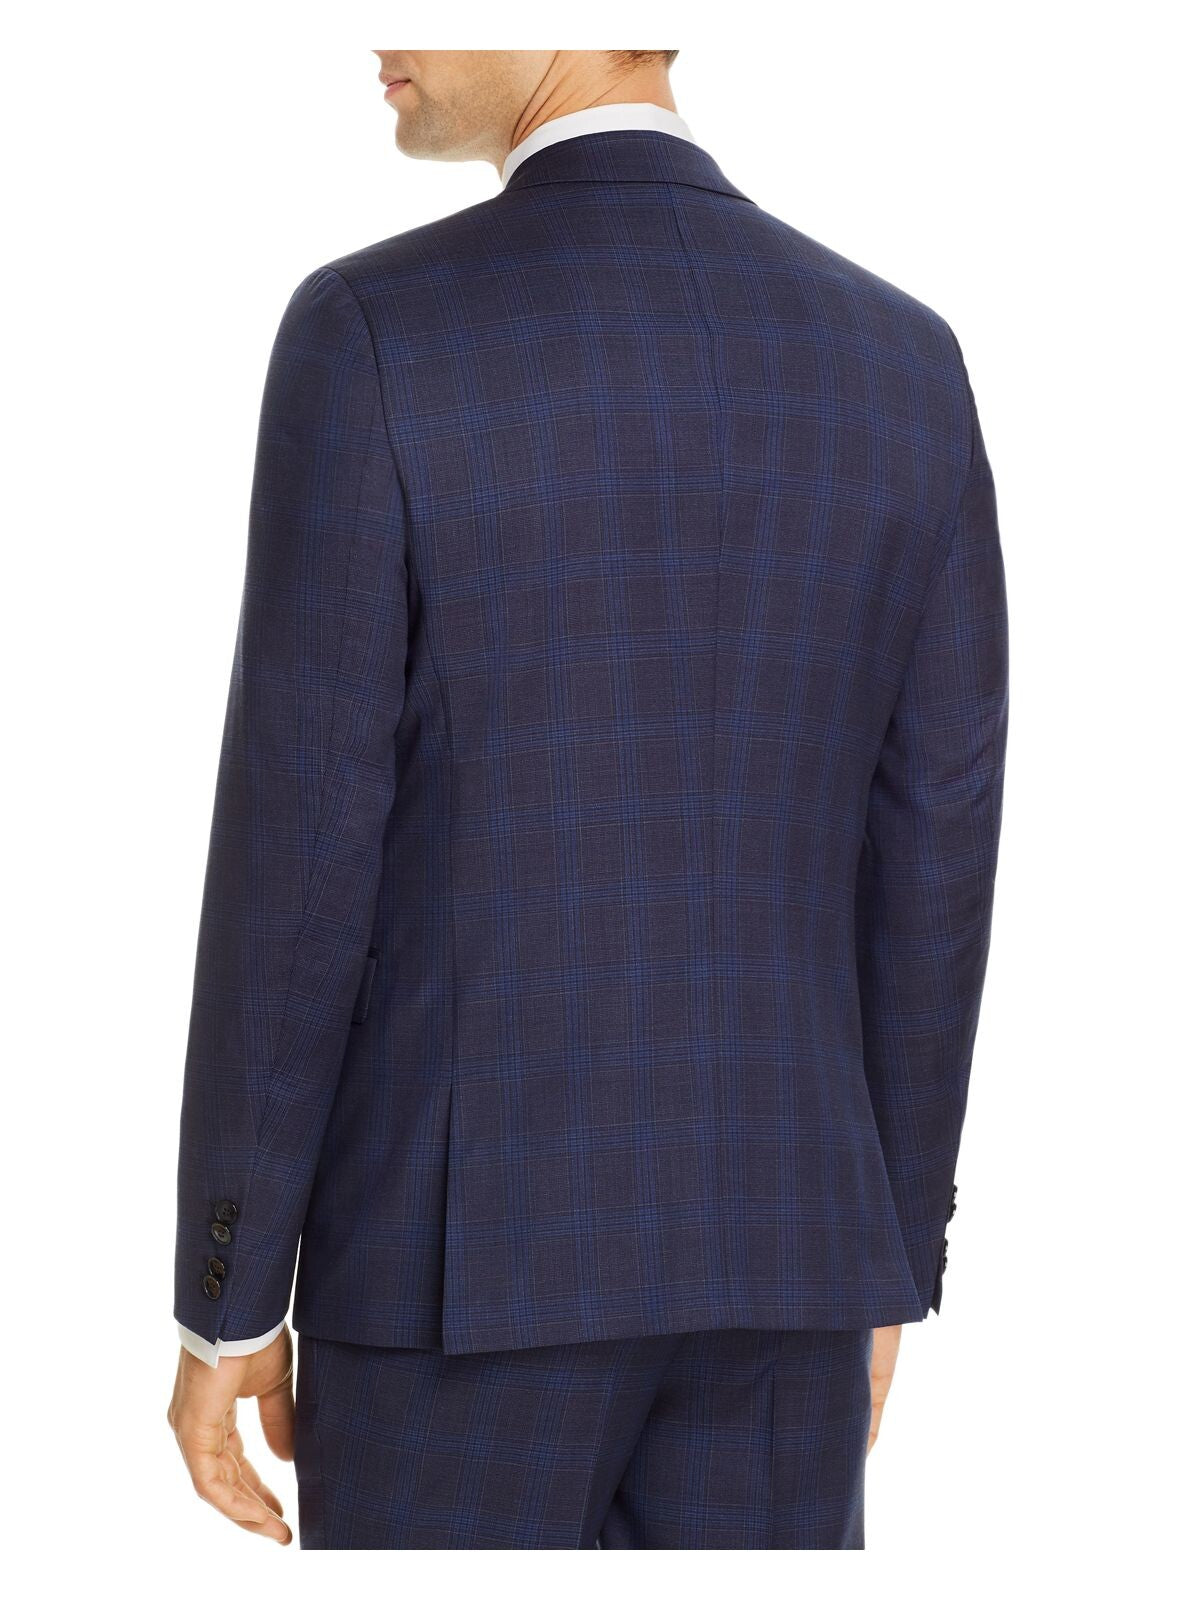 HUGO BOSS Mens Navy Check Extra Slim Fit Suit Separate Blazer Jacket 40L